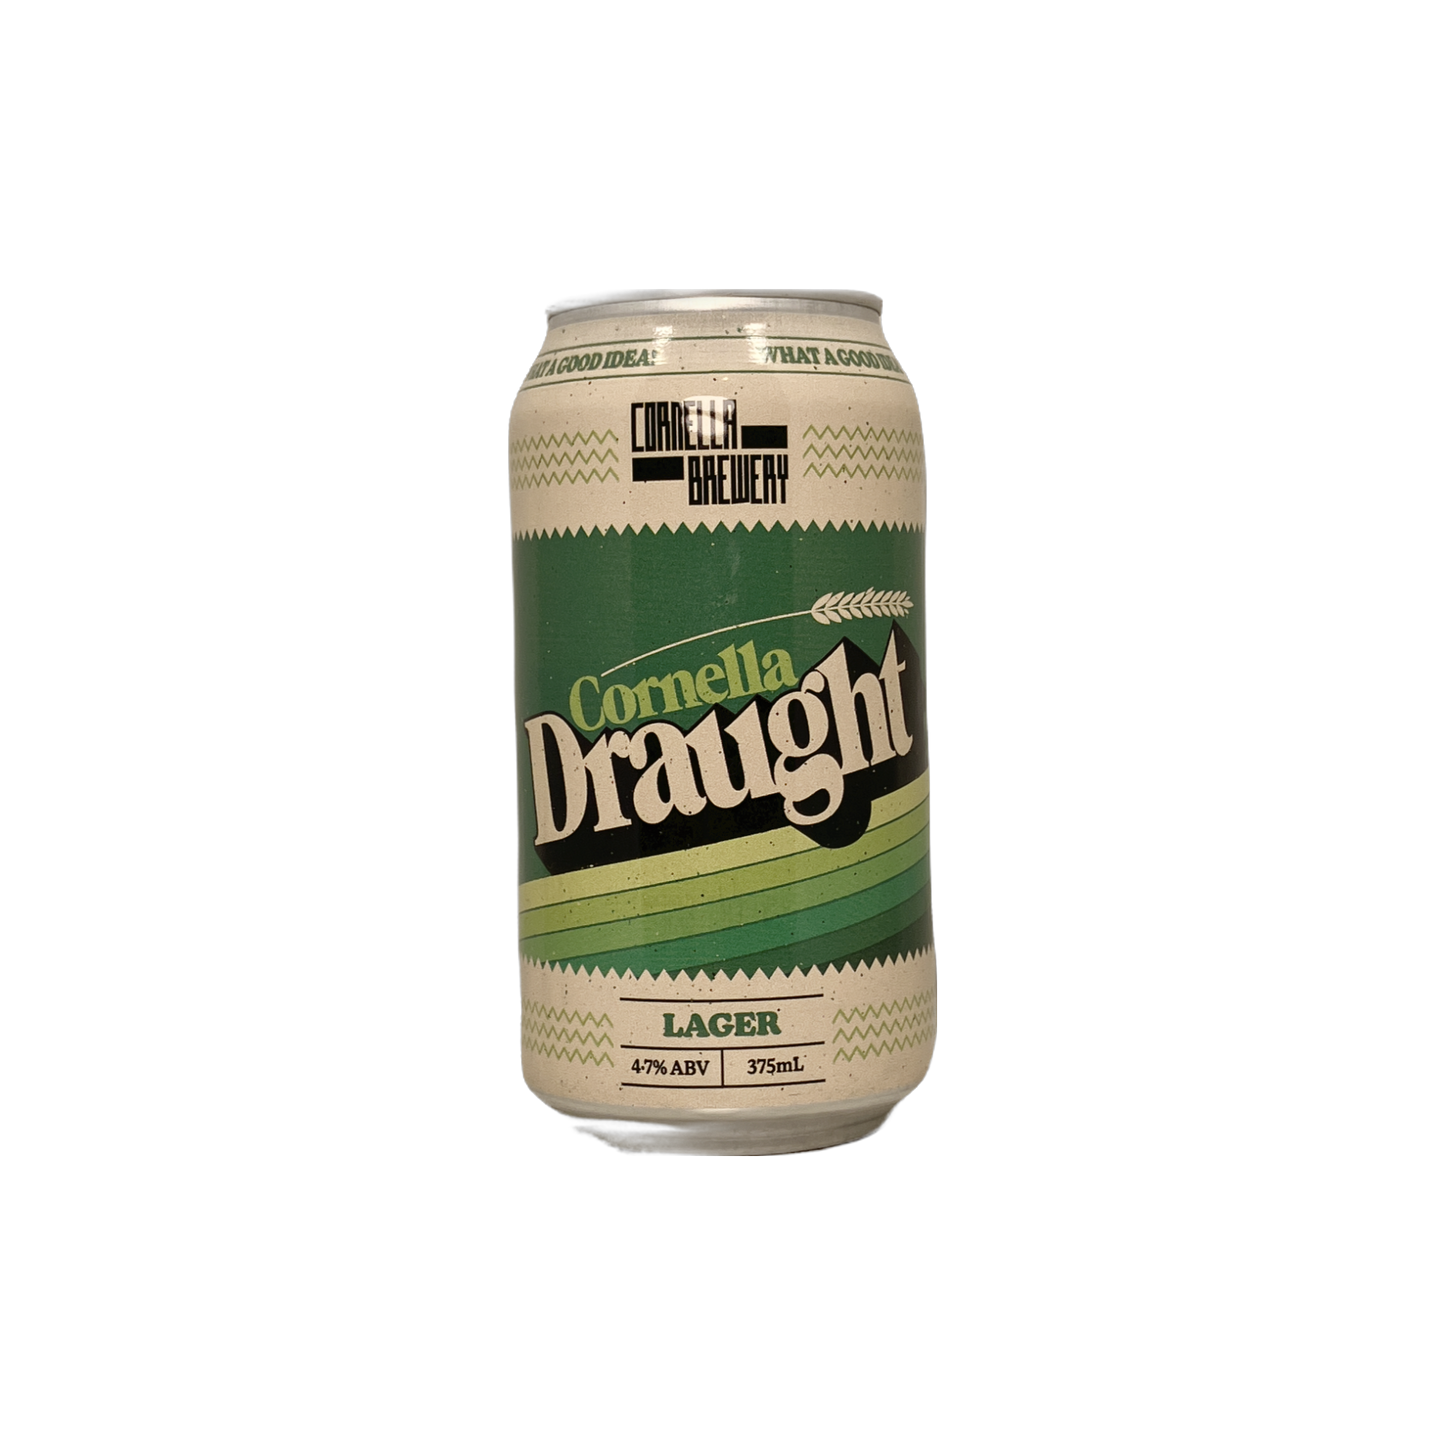 Cornella Brewery Draught 375ml